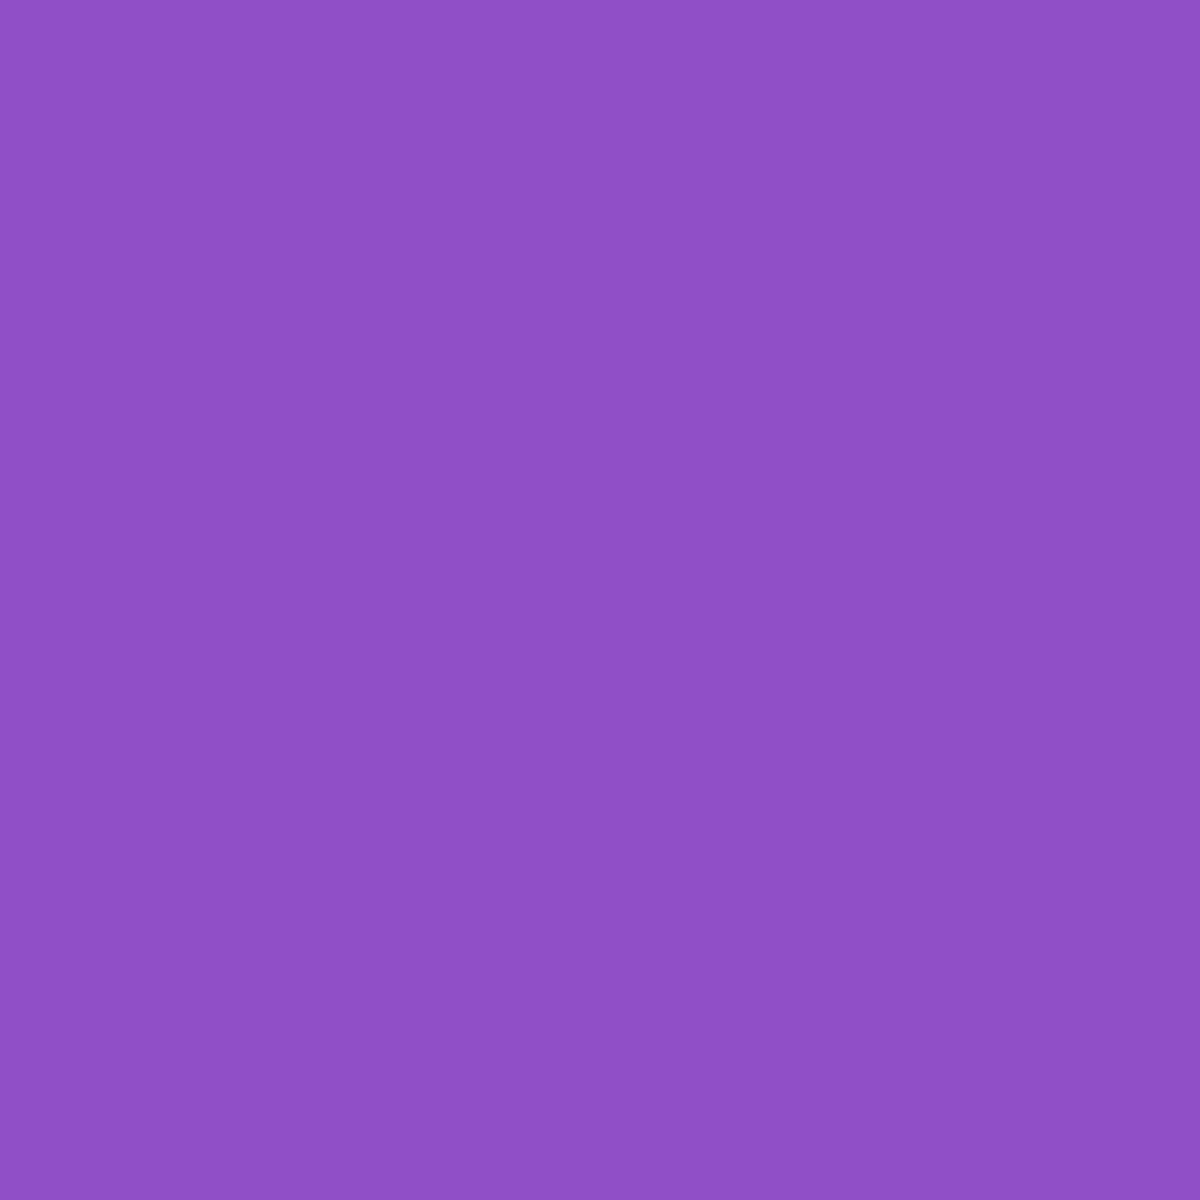 SRKM-15837-192 SPRING from Grand Majolica  Robert kaufman fabrics, Purple  flowers, Fabric